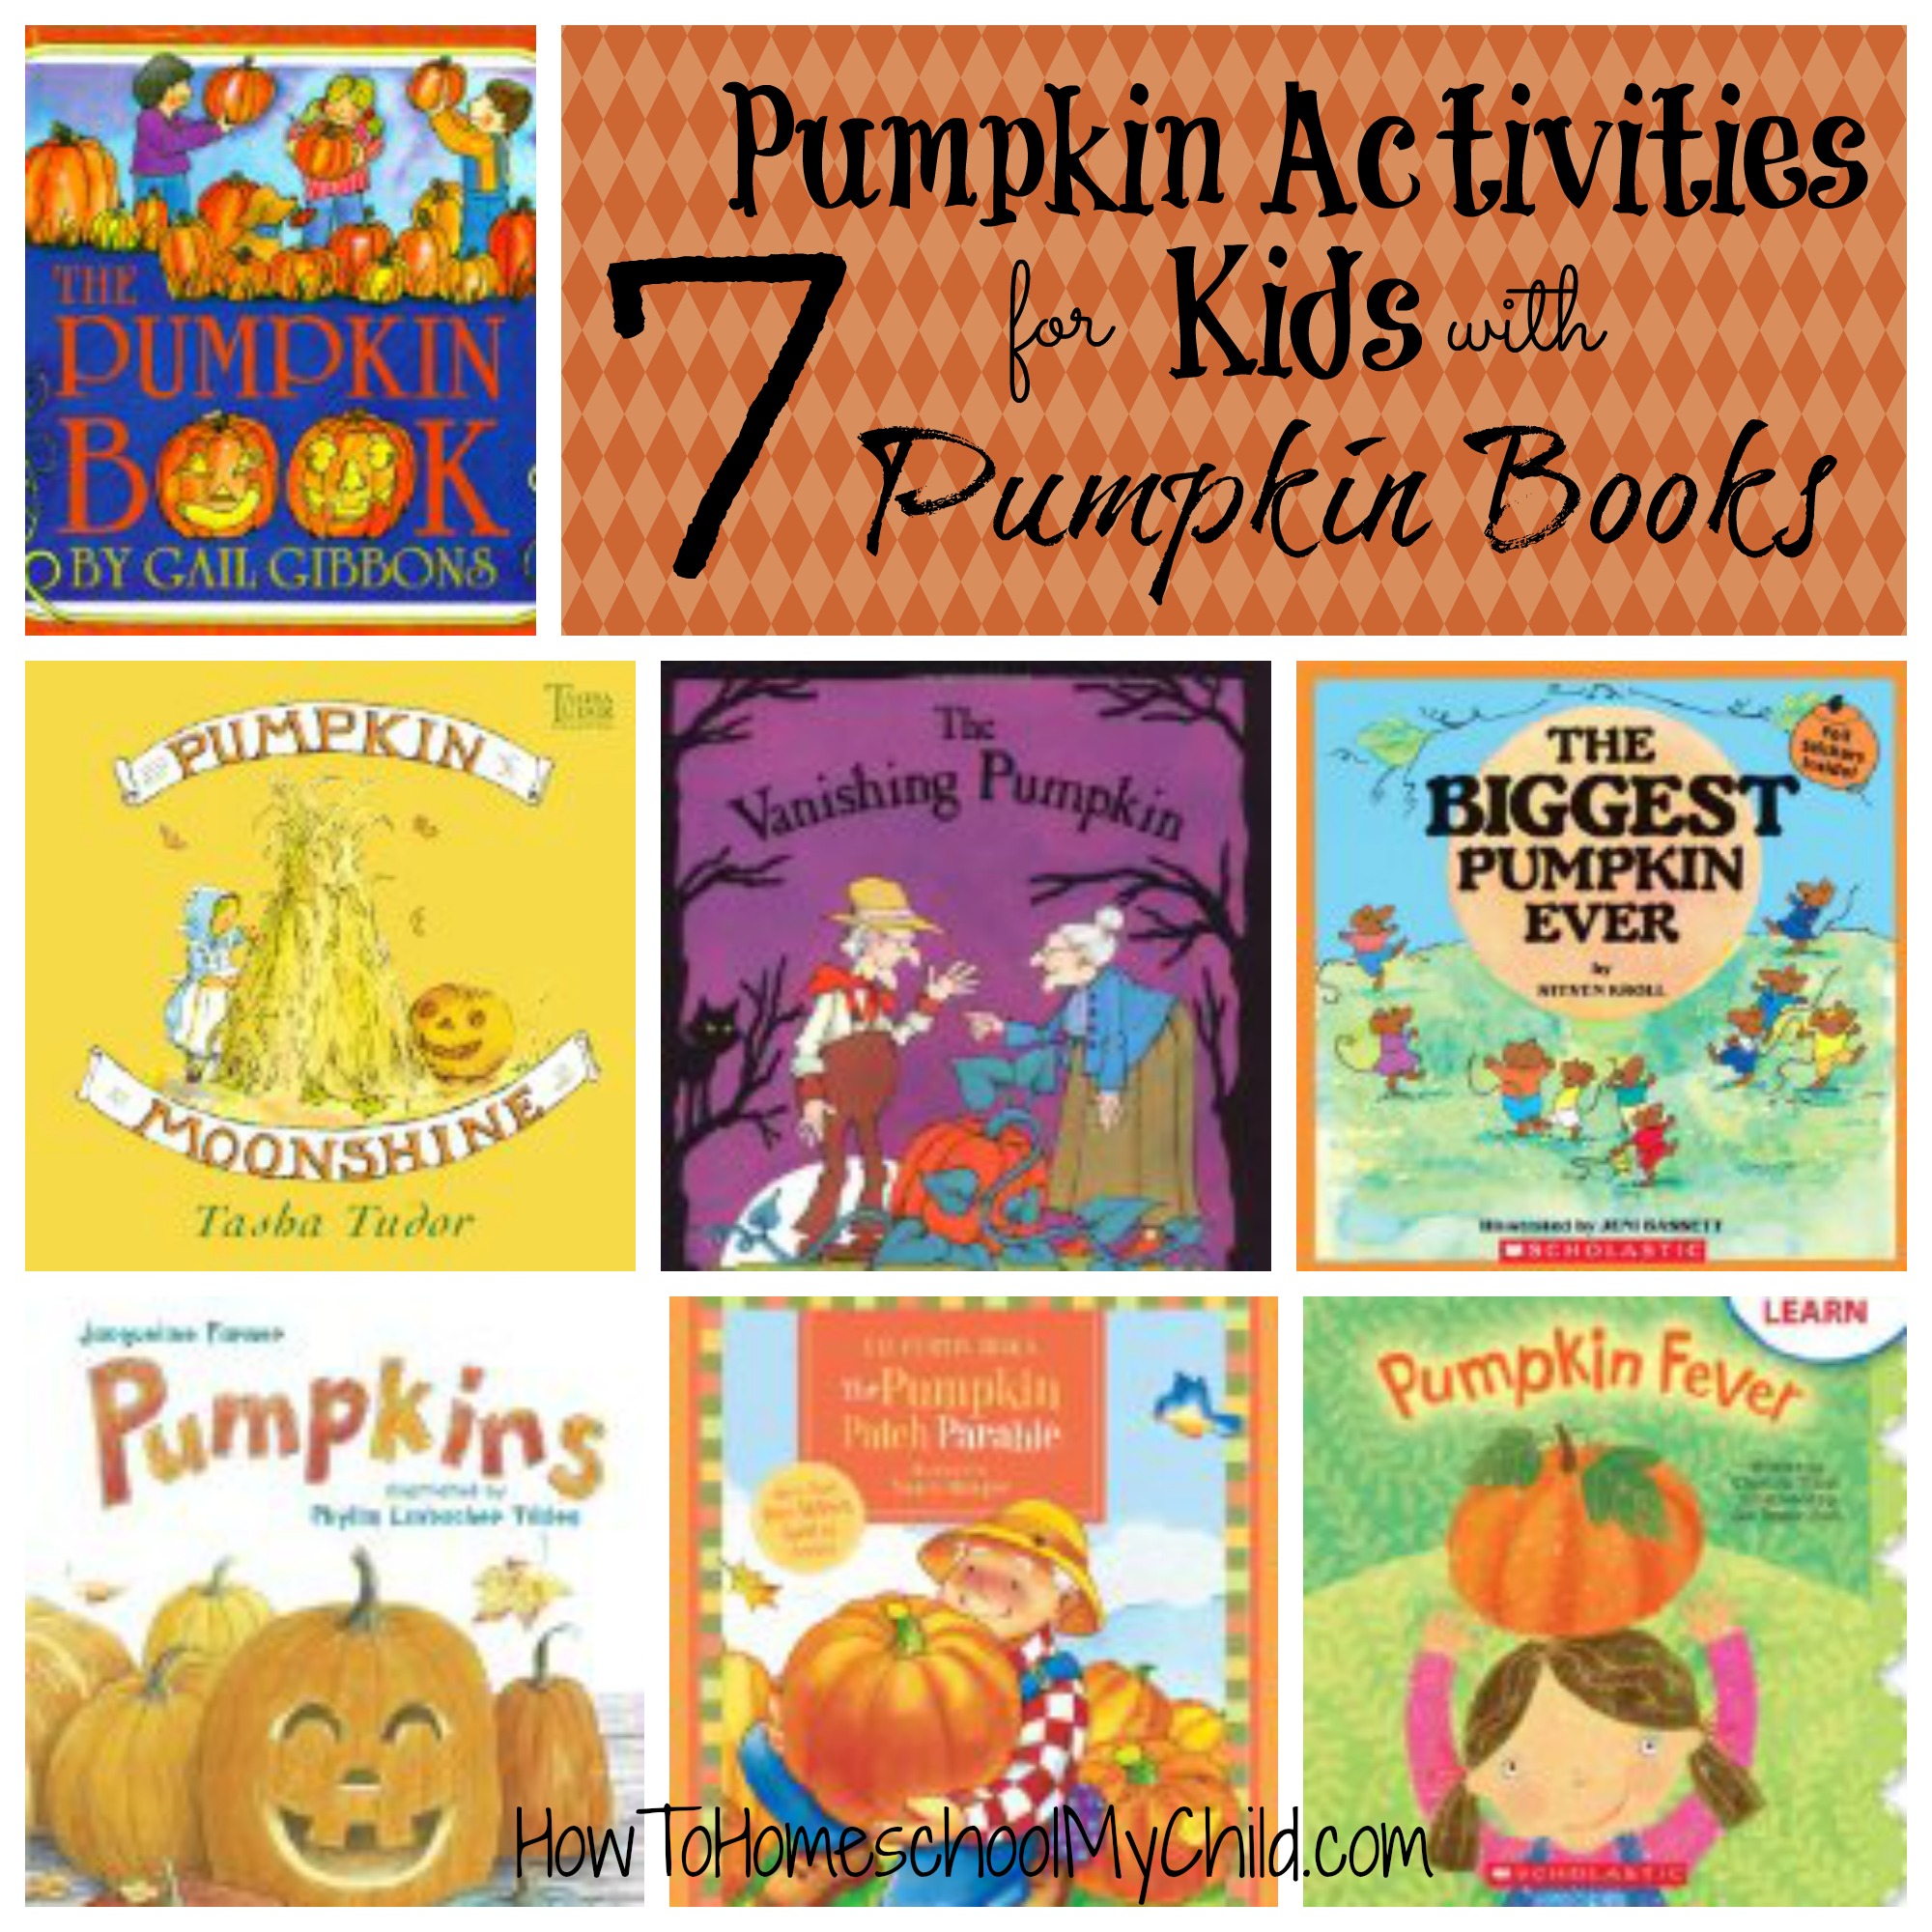 pumpkin activities for kids with 7 pumpkin books ~ HowToHomeschoolMyChild.com